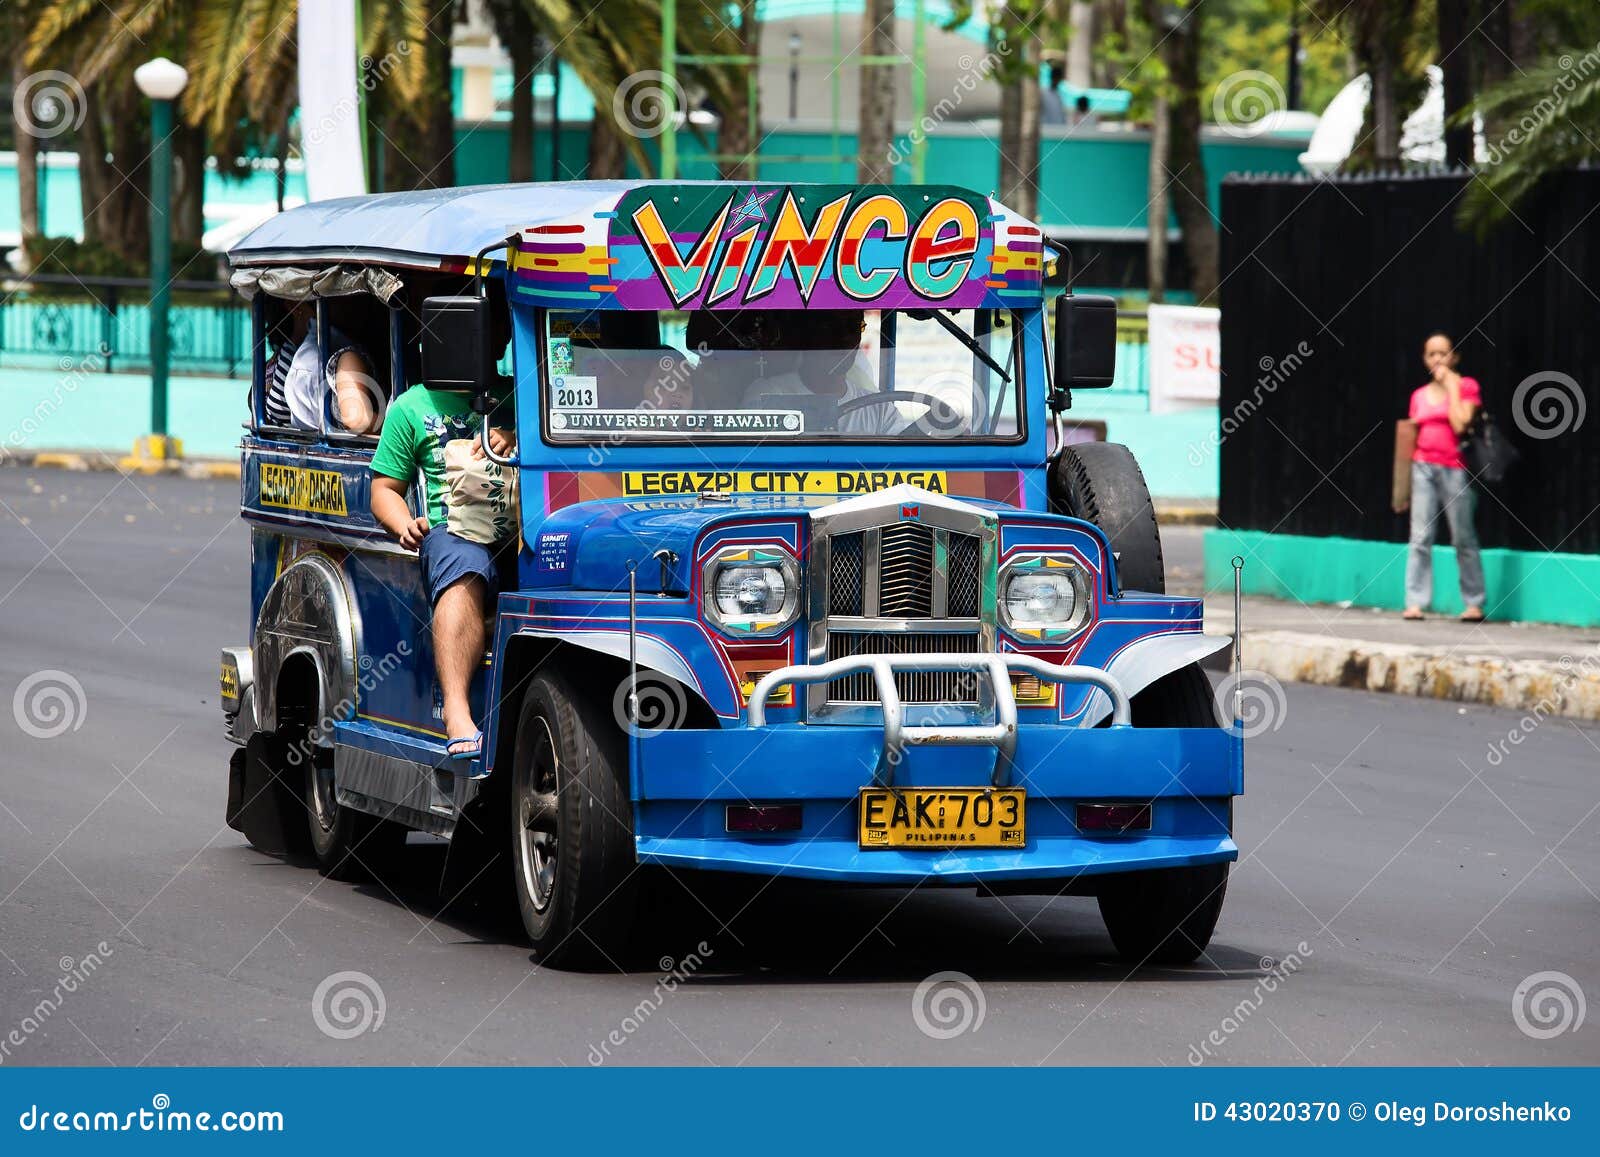 sabit | The Philippine Jeepney | Pinoy Animation - YouTube